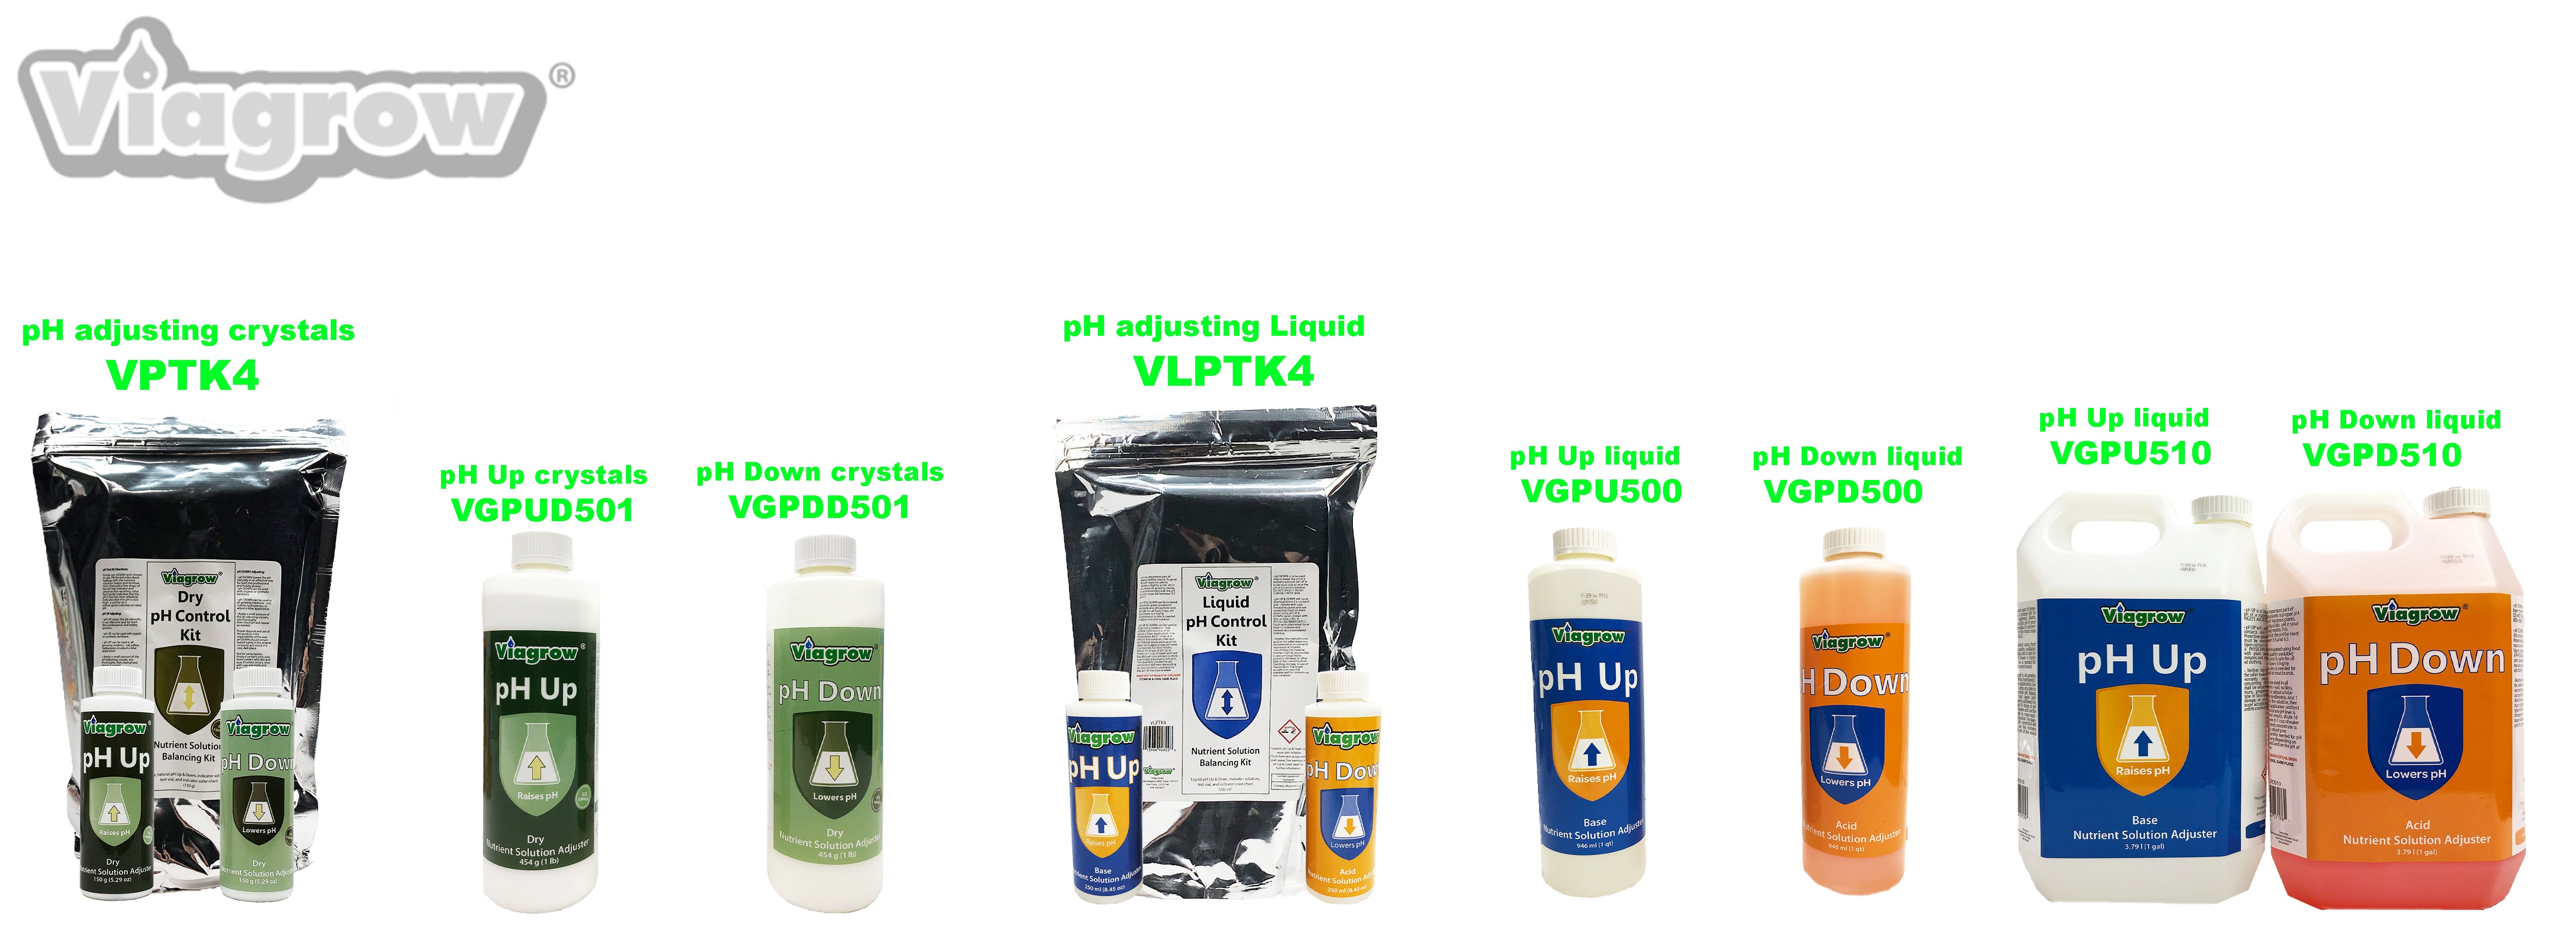 Viagrow Complete Testing & Adjusting pH Control Kit, Crystal